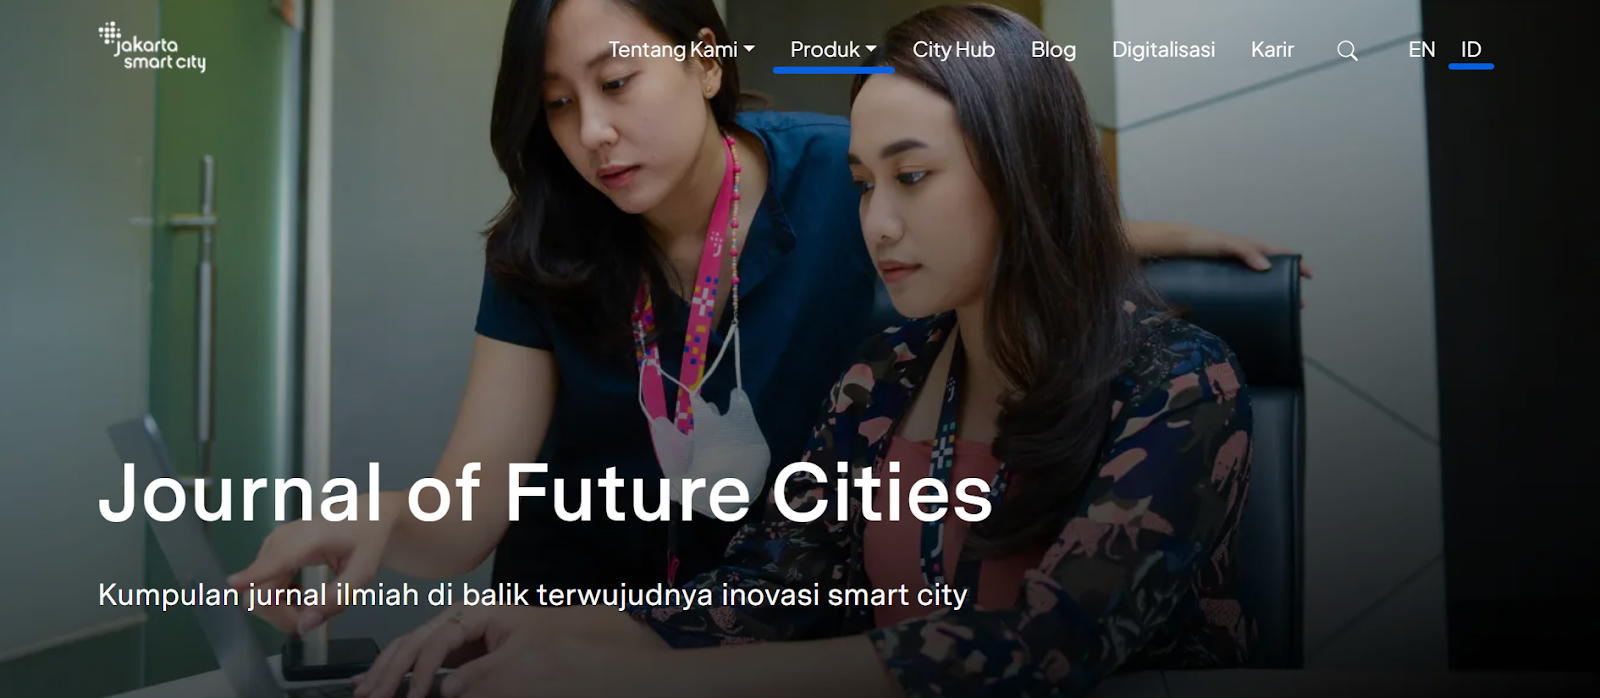 Journal of Future Cities, Repositori Jurnal Smart City